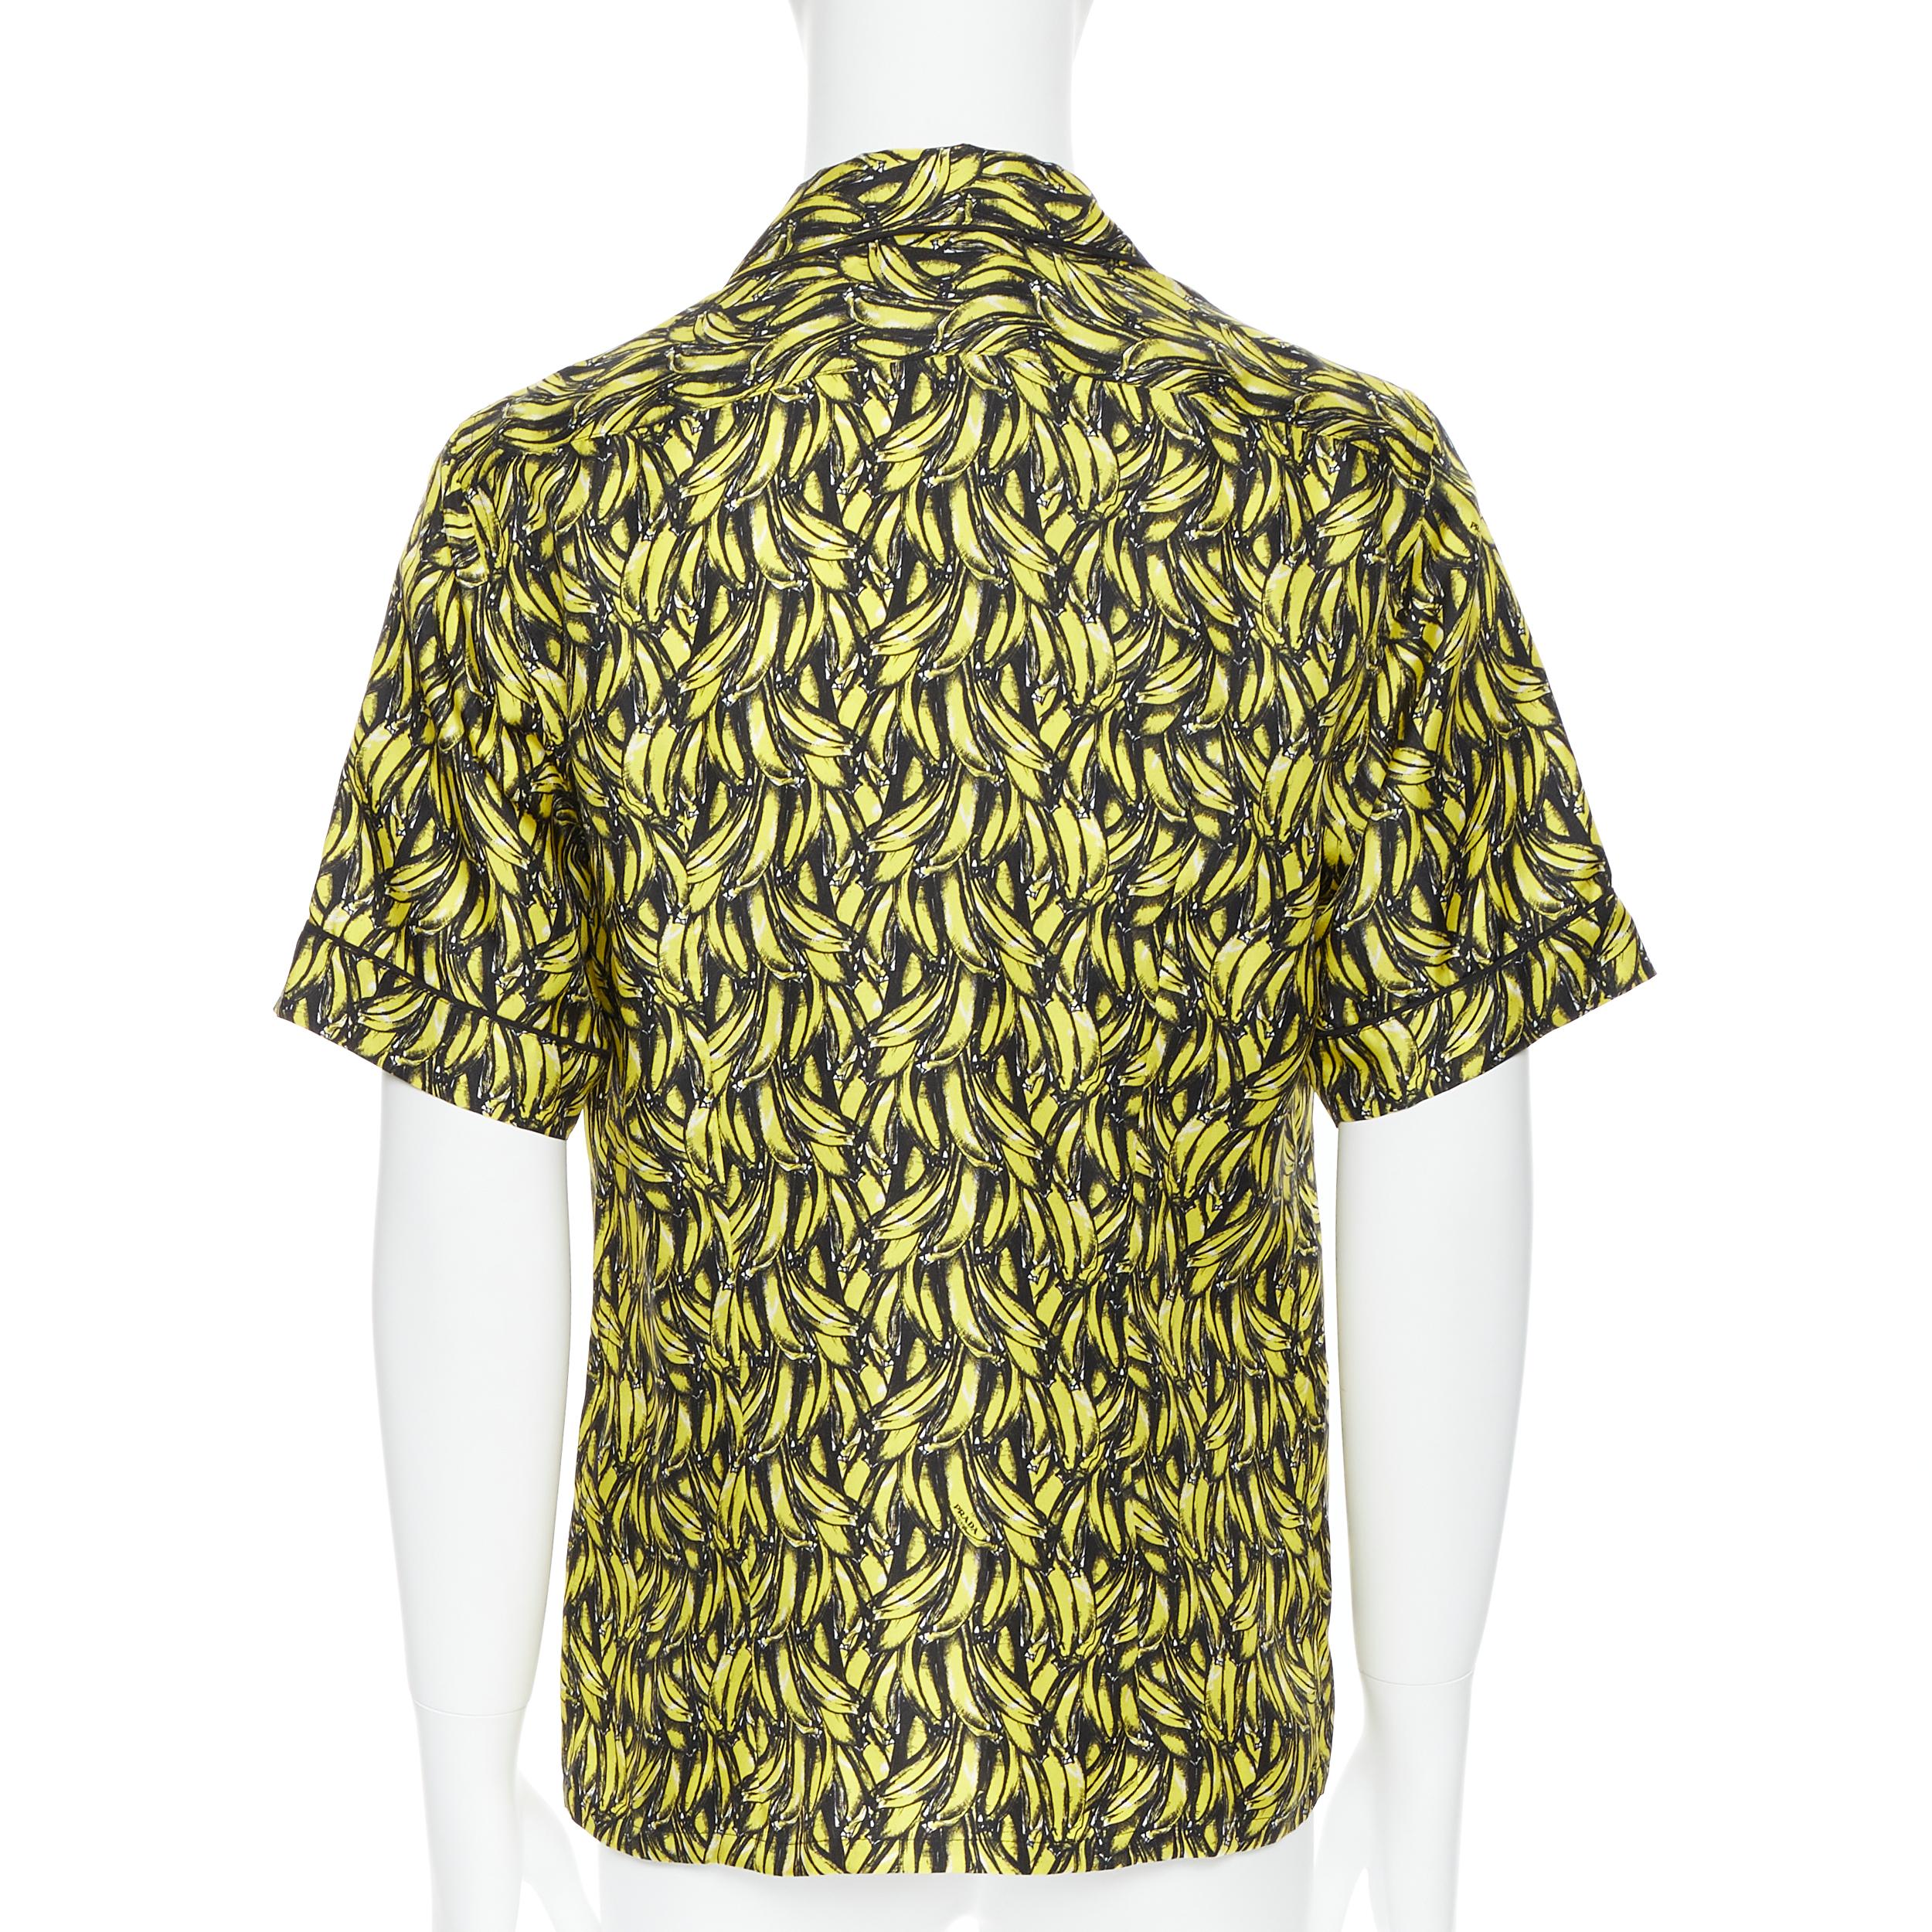 Men's new PRADA 2018 iconic Banana yellow 100% silk short sleeve bowling shirt S